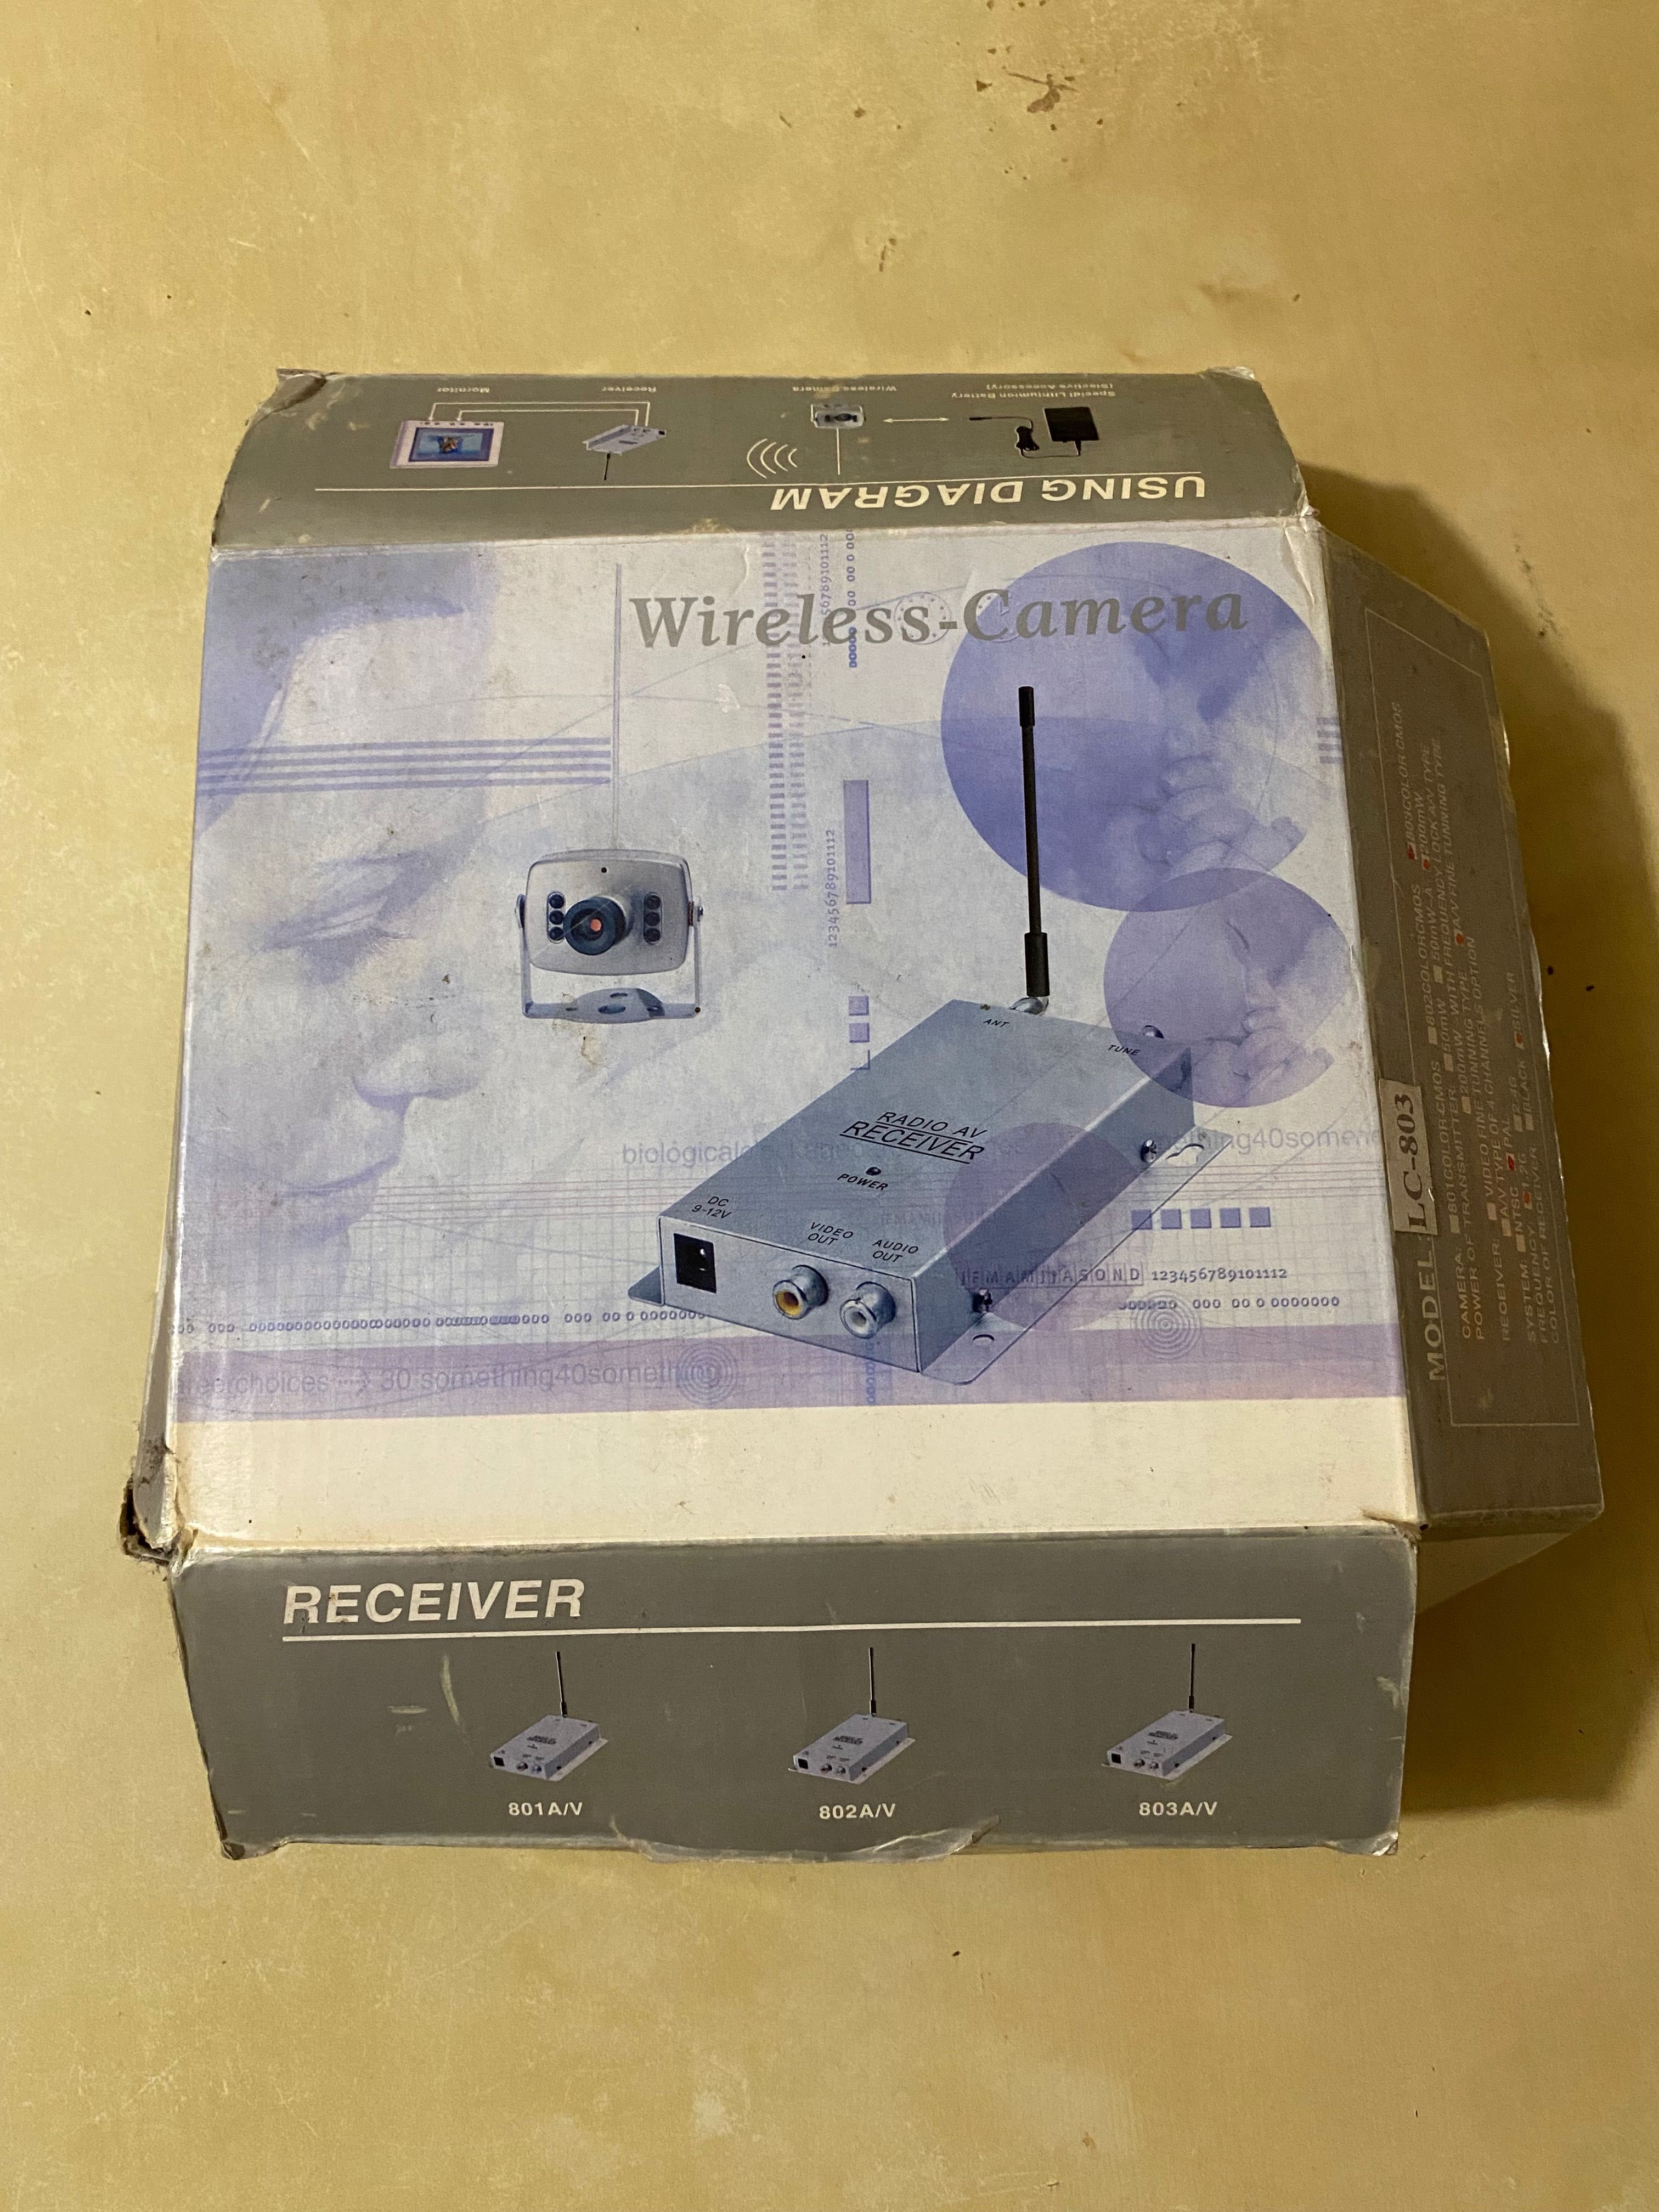 Wireless camera model LC-803